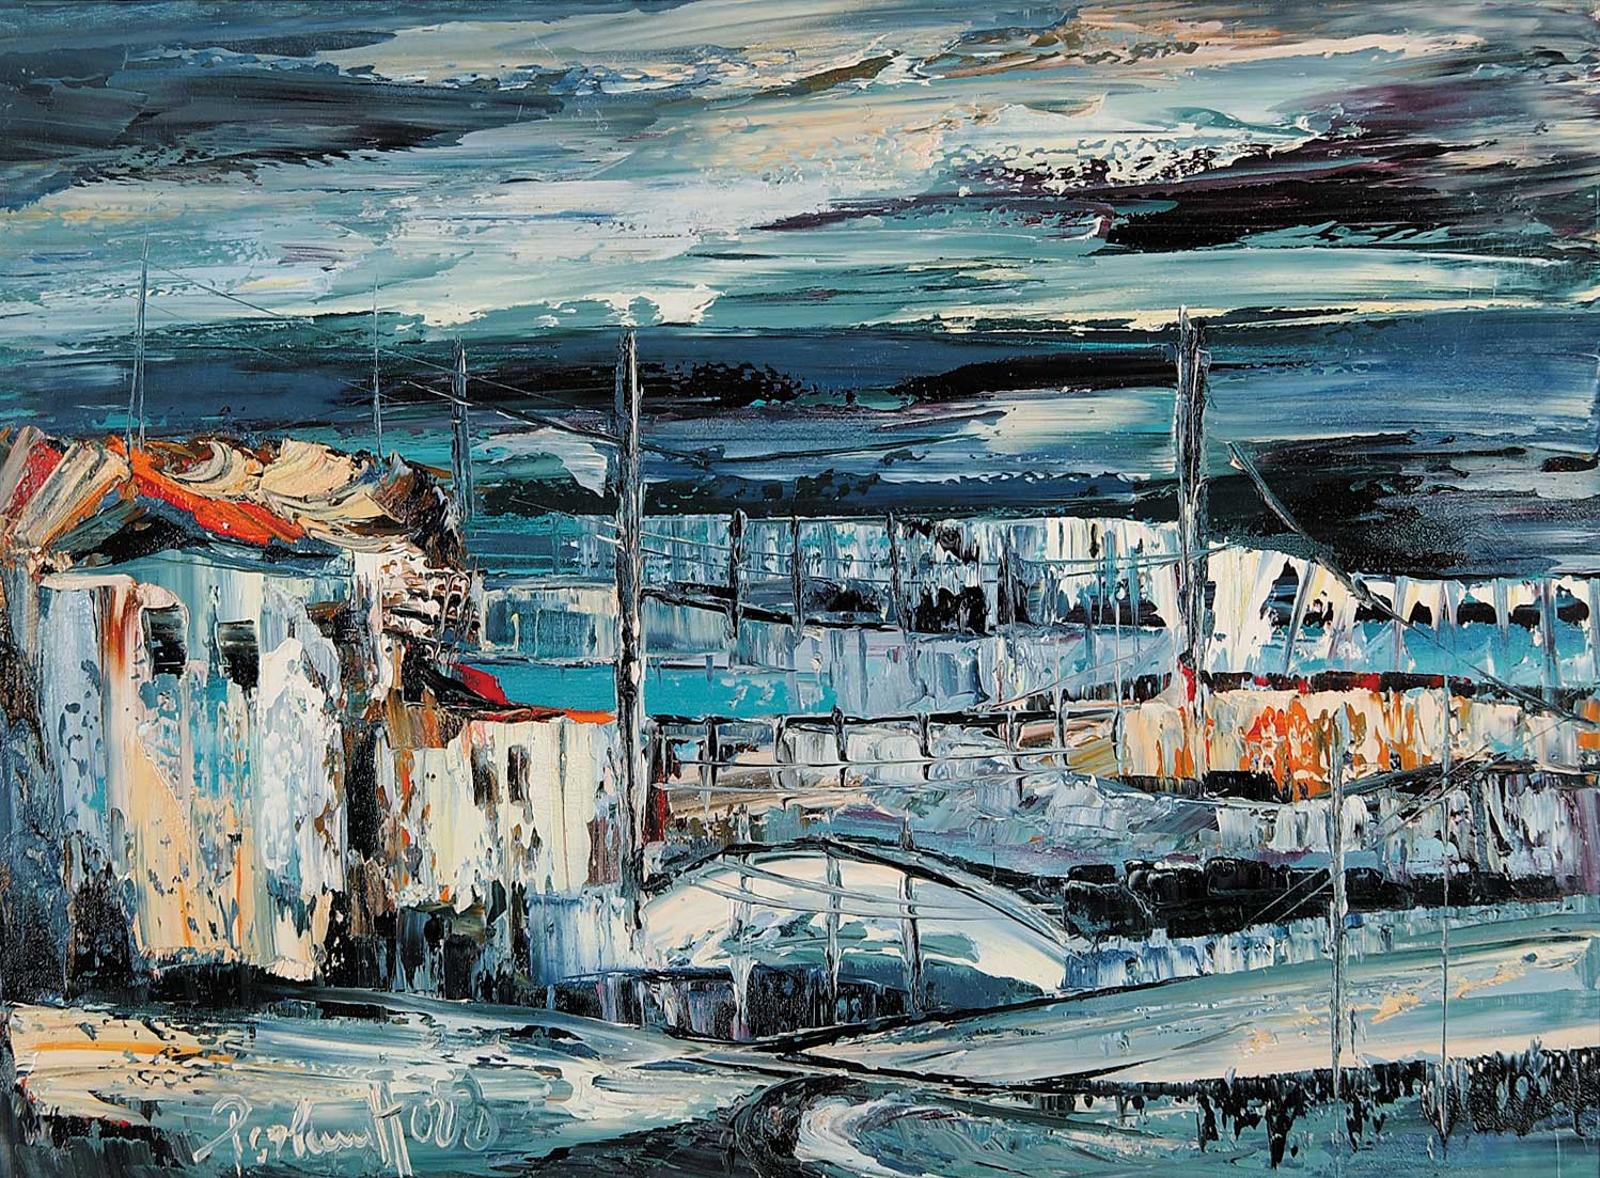 Zoltan Perlmutter (1922-2002) - Untitled - Coastal Town